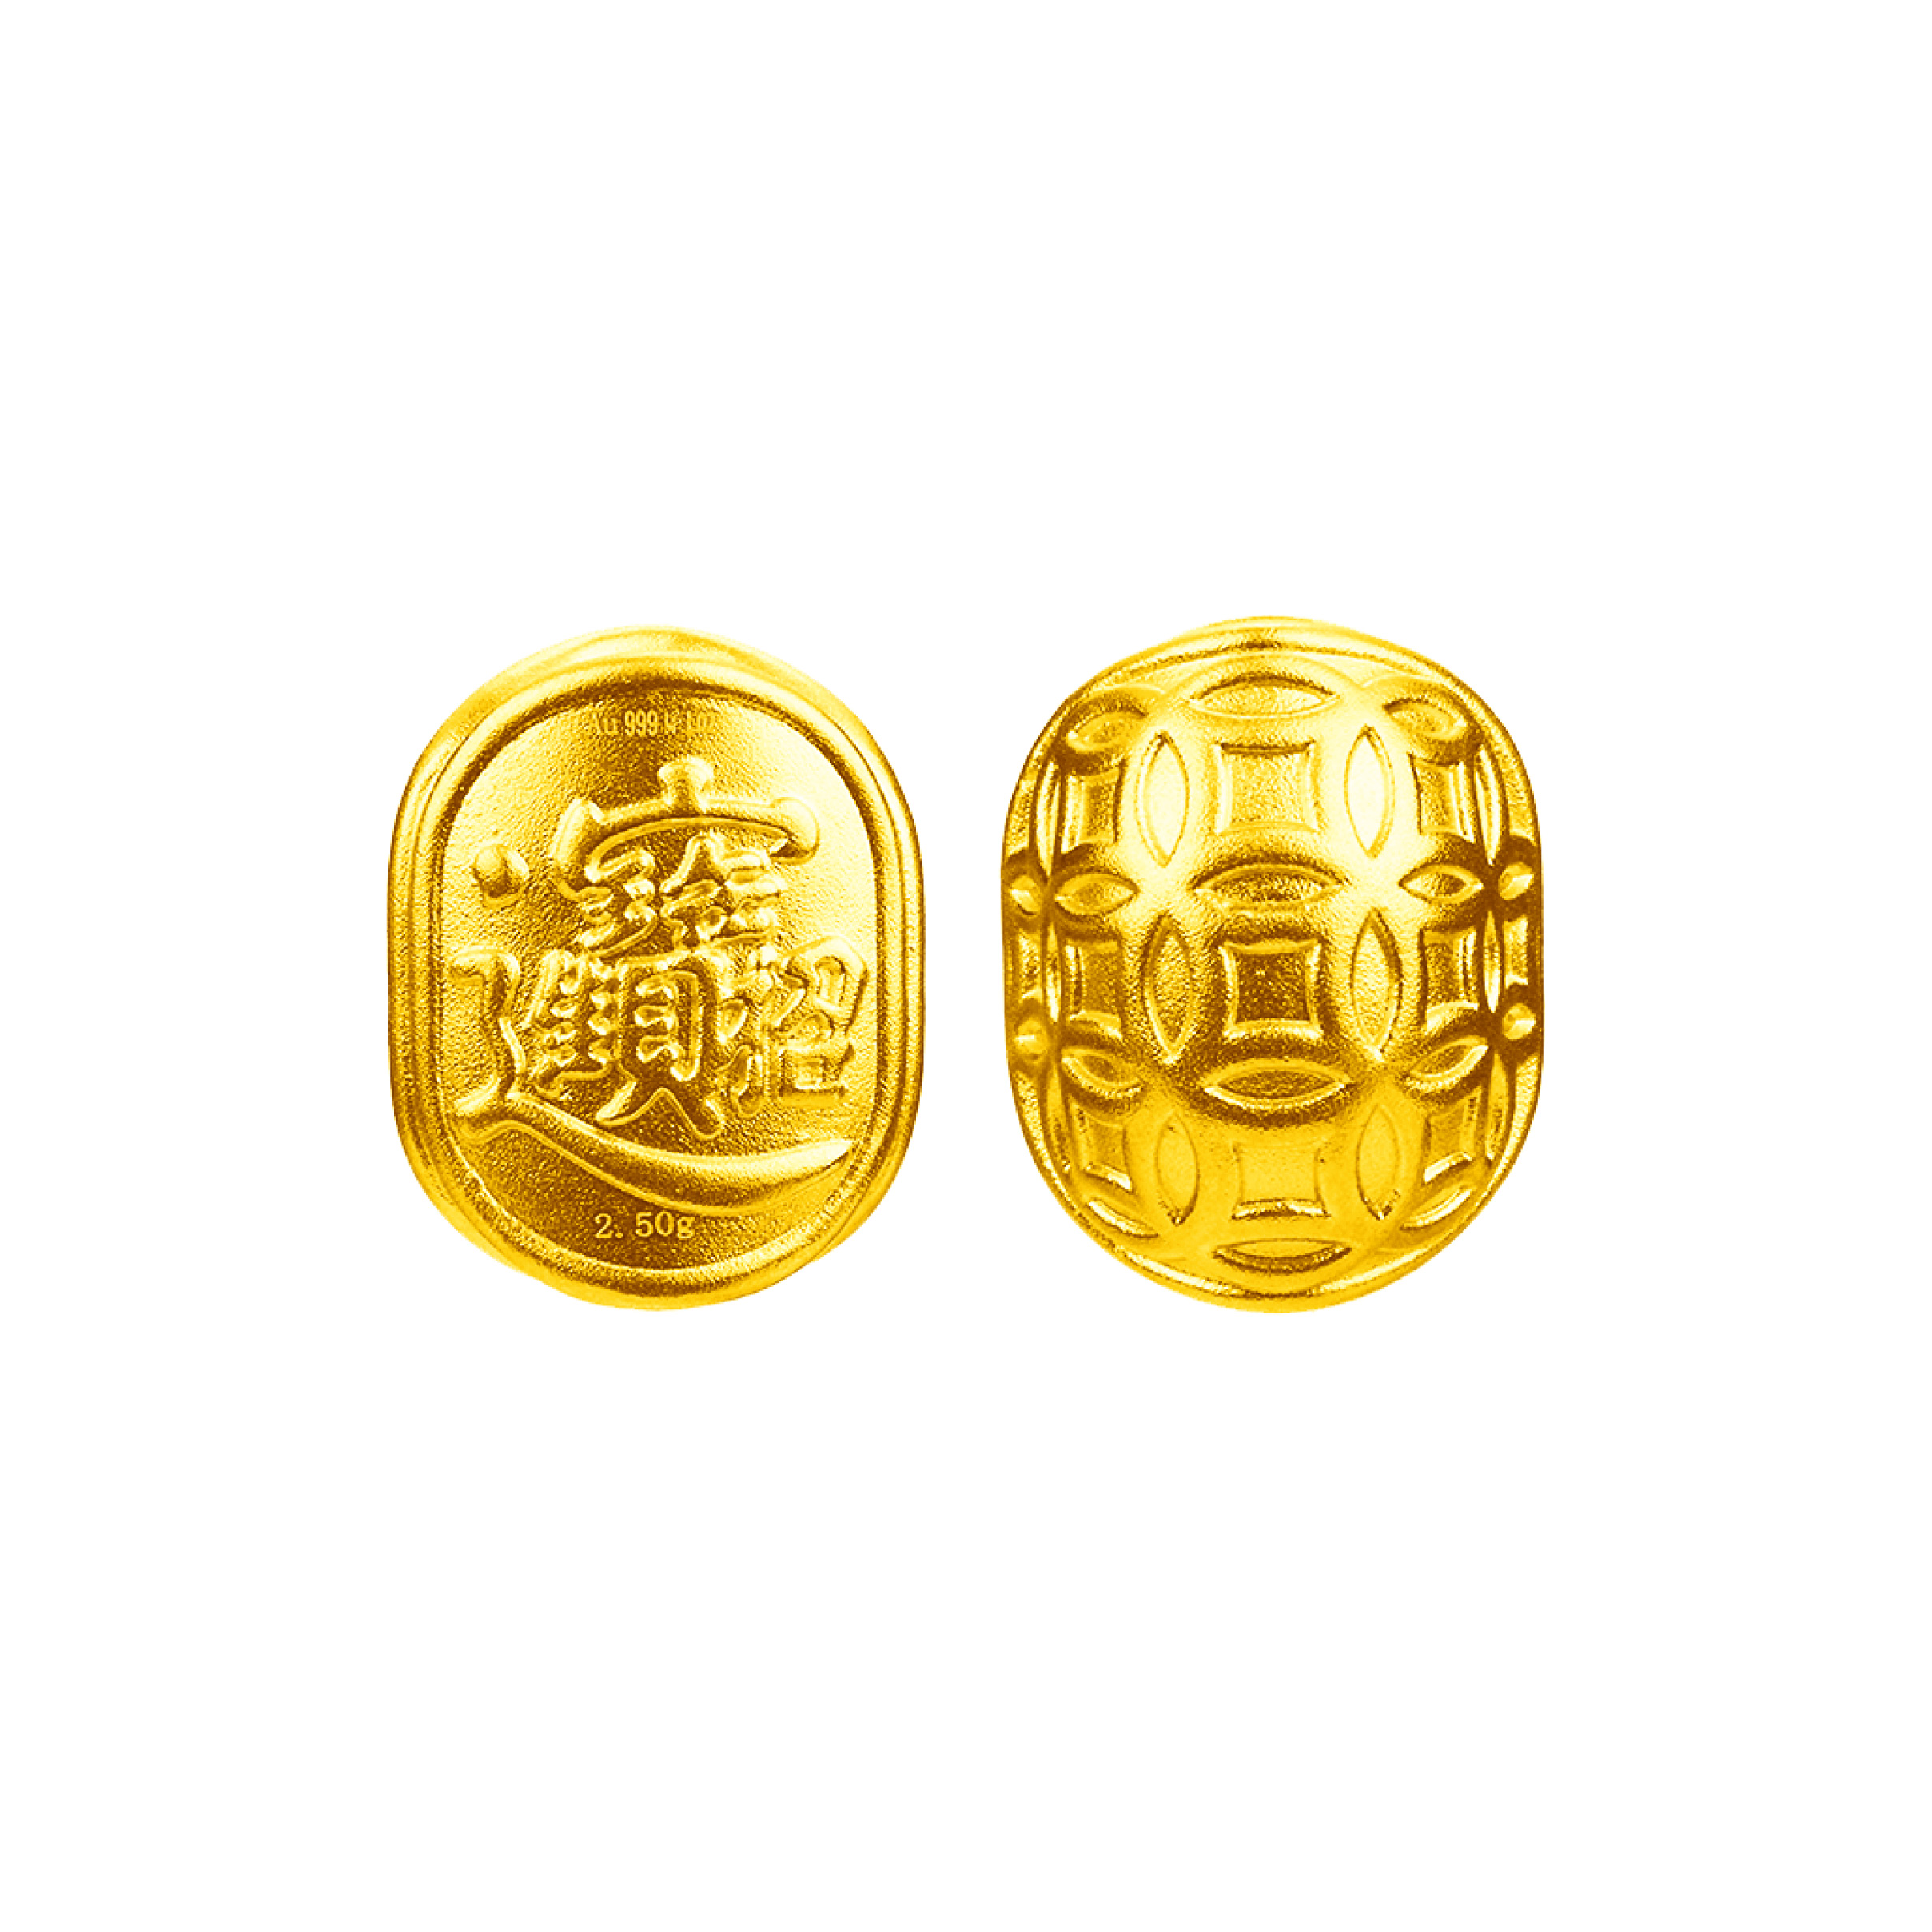 Antique Gold「旺福」Gold Pendant